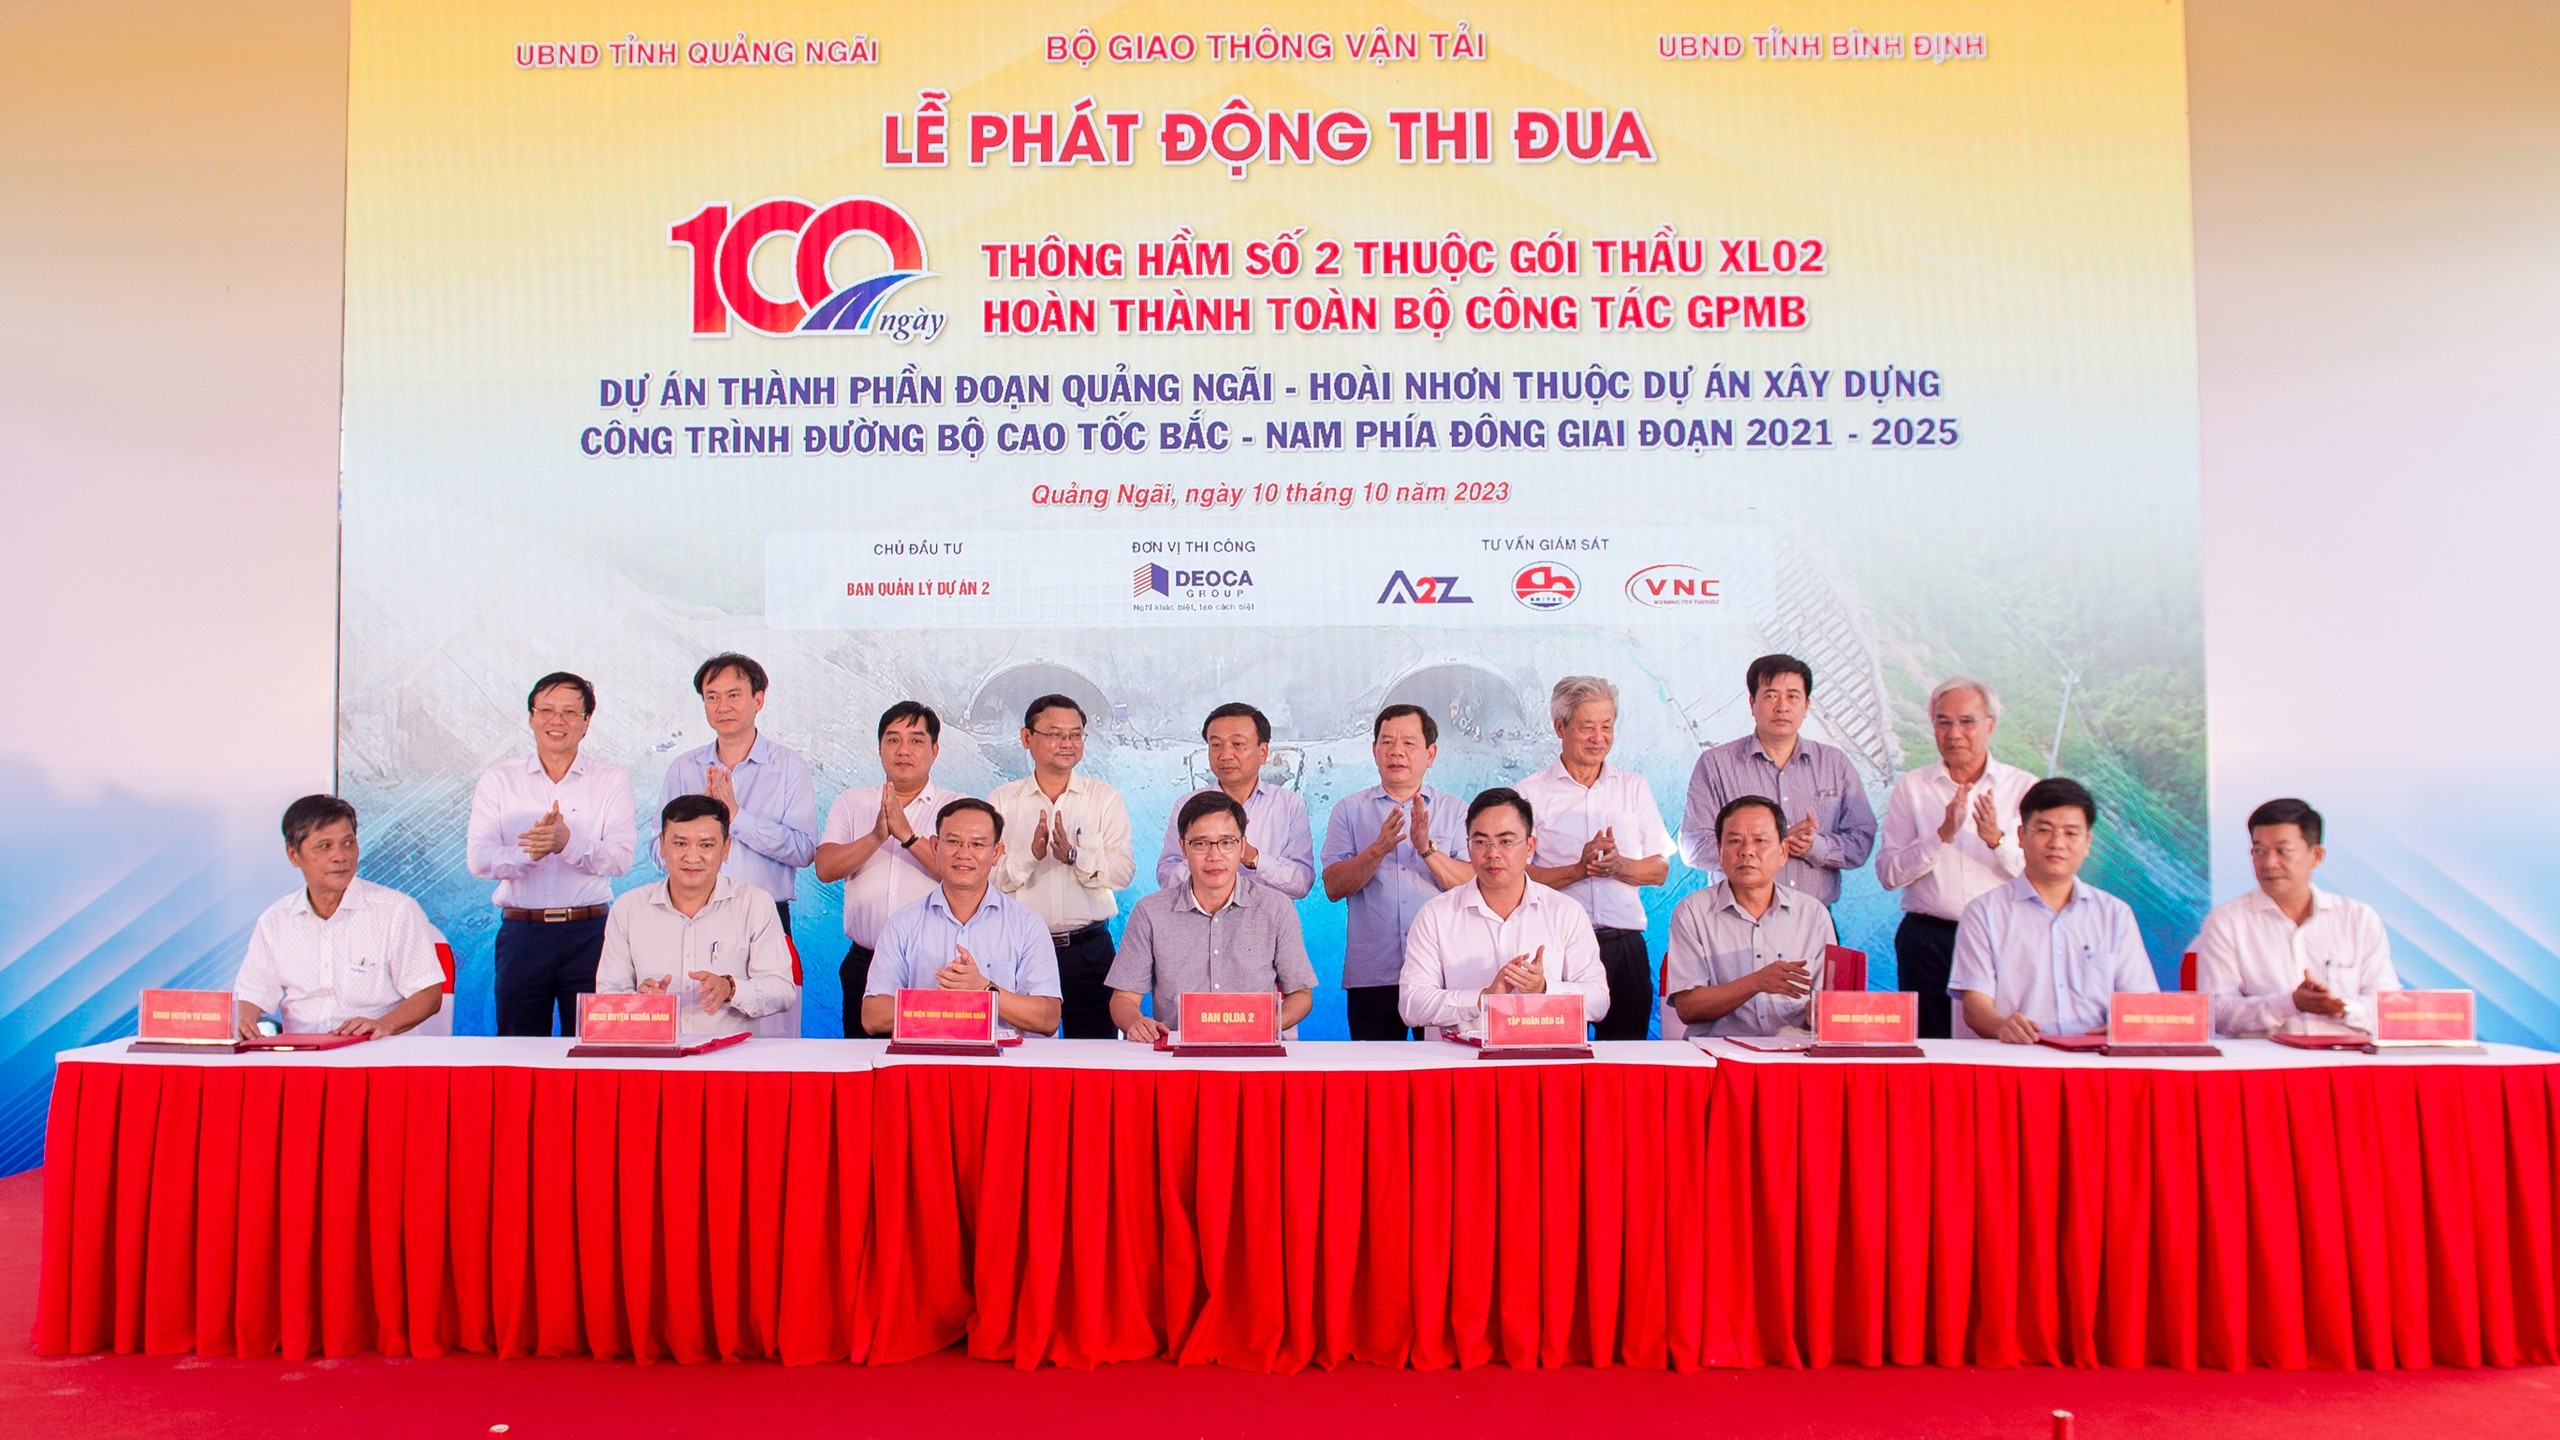 Cao toc Quang Ngai - Hoai Nhon: Nhieu ung dung, giai phap moi trong thi cong-Hinh-3